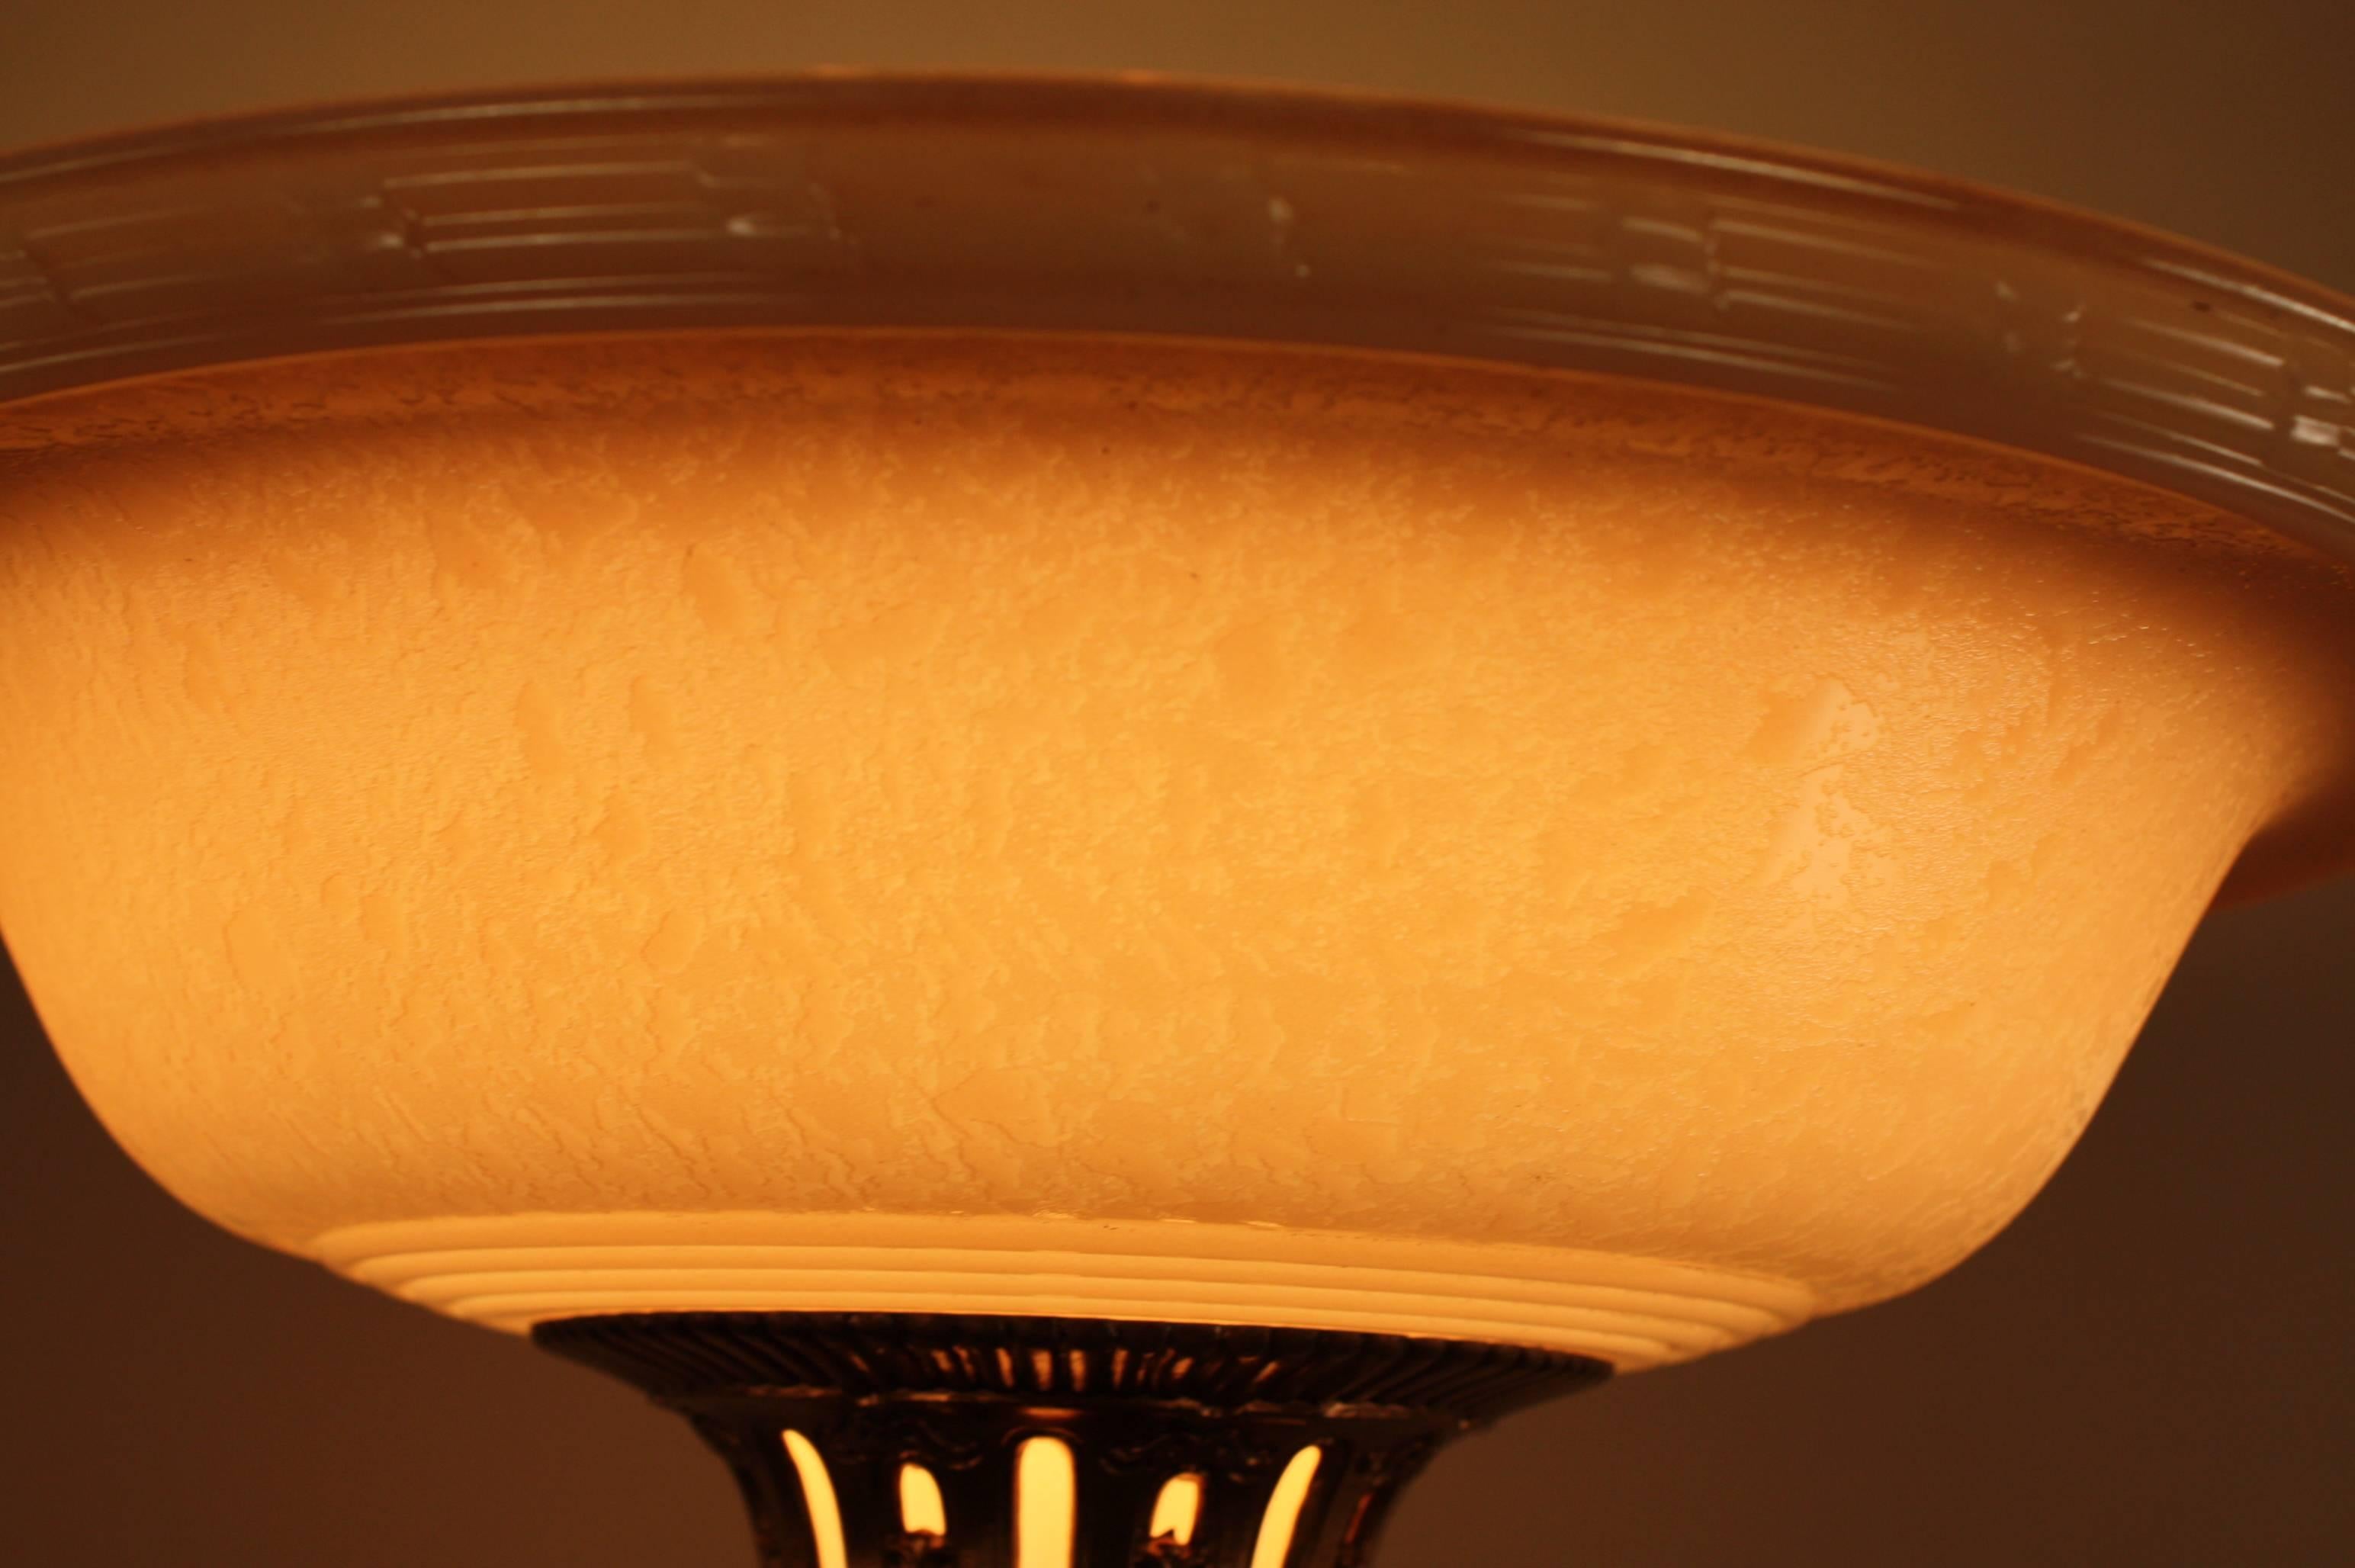 Bronzed American Torchiere Floor Lamp